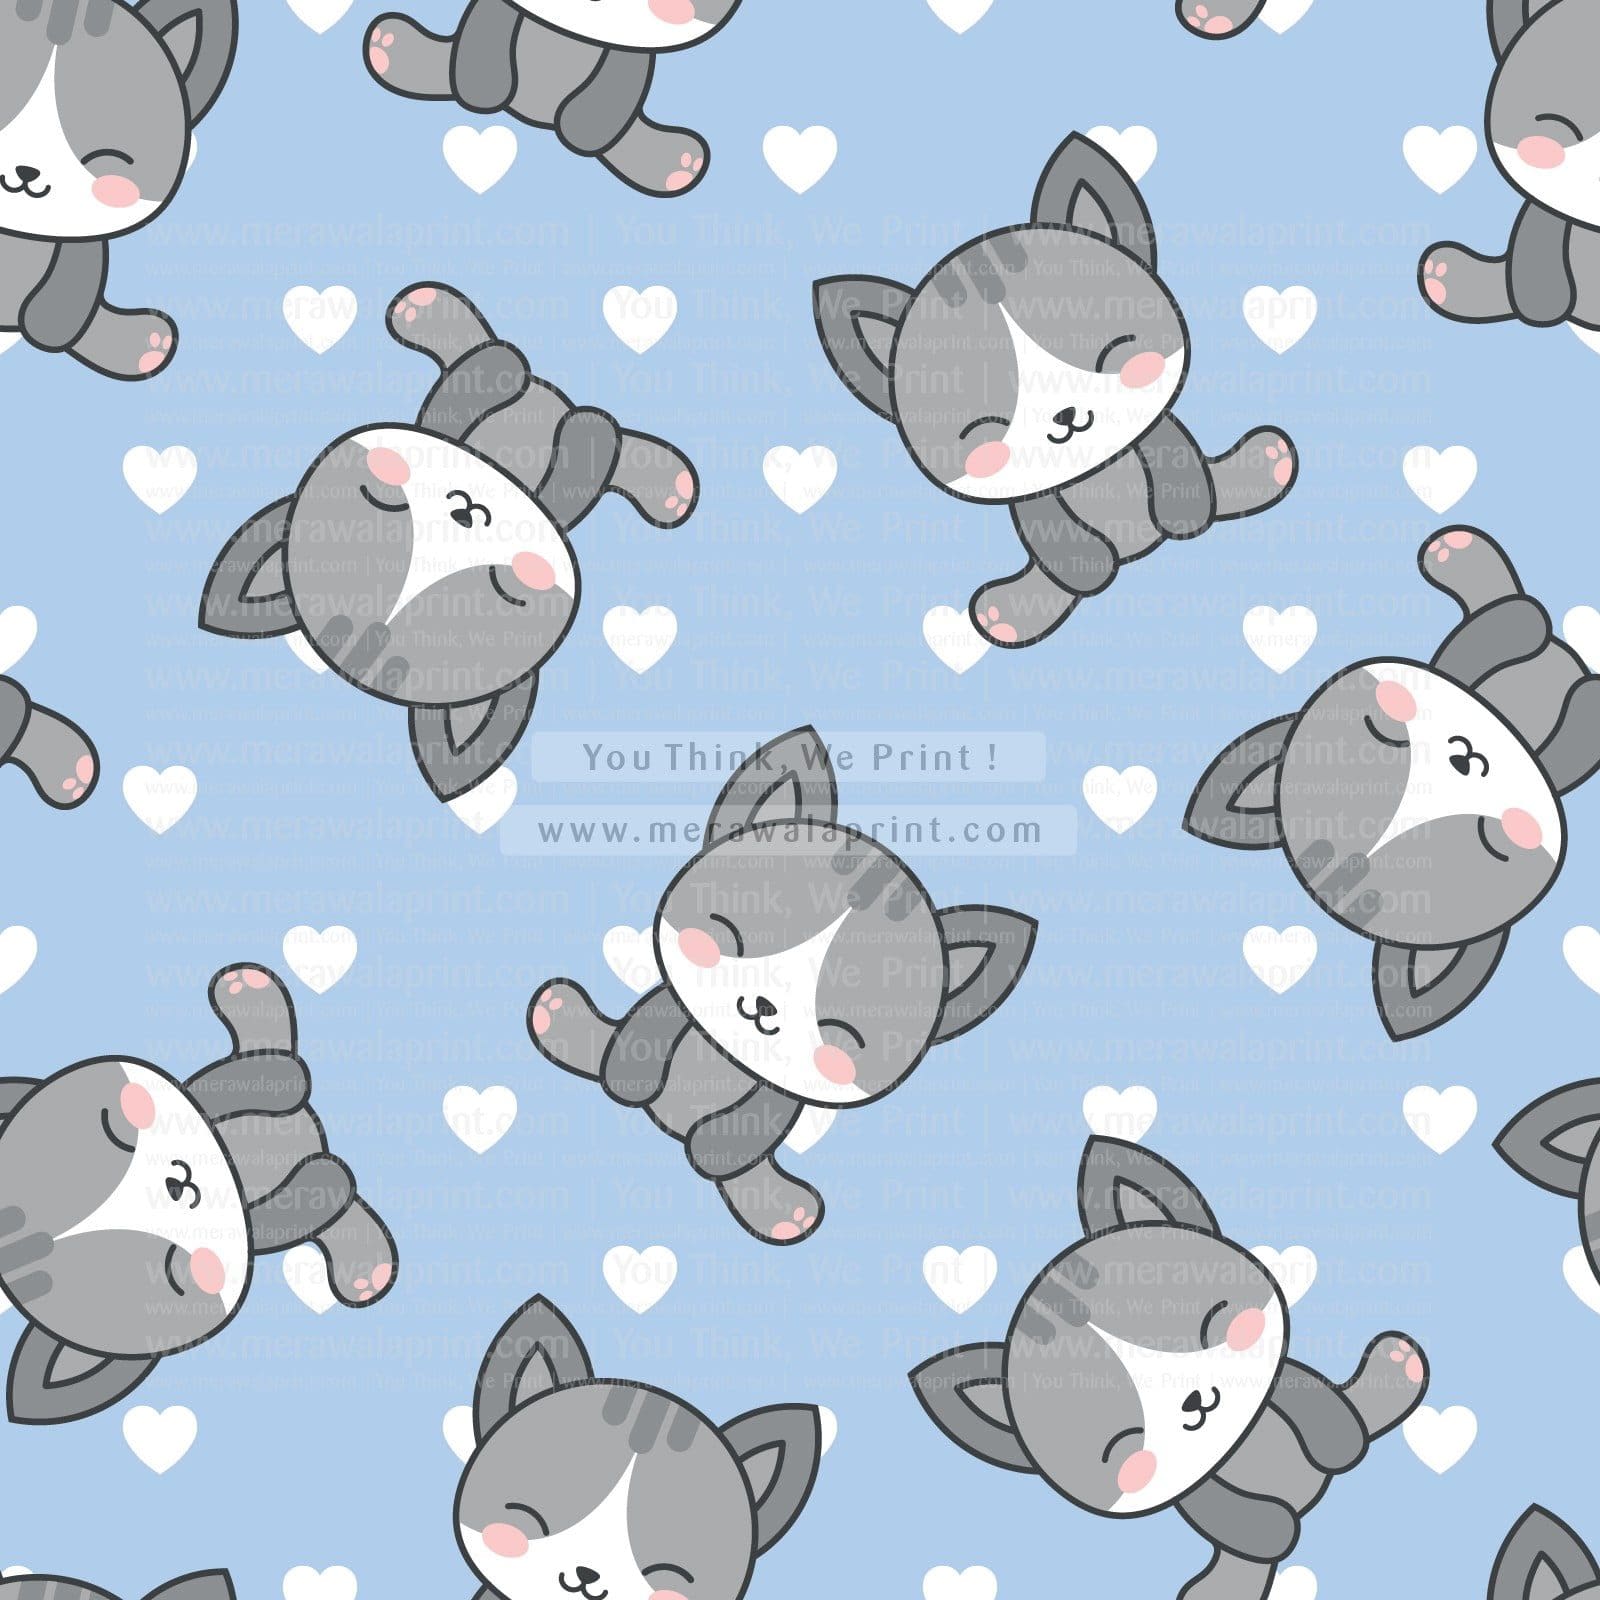 Cute Cats with Heart Dots wallpaper - Merawalaprint